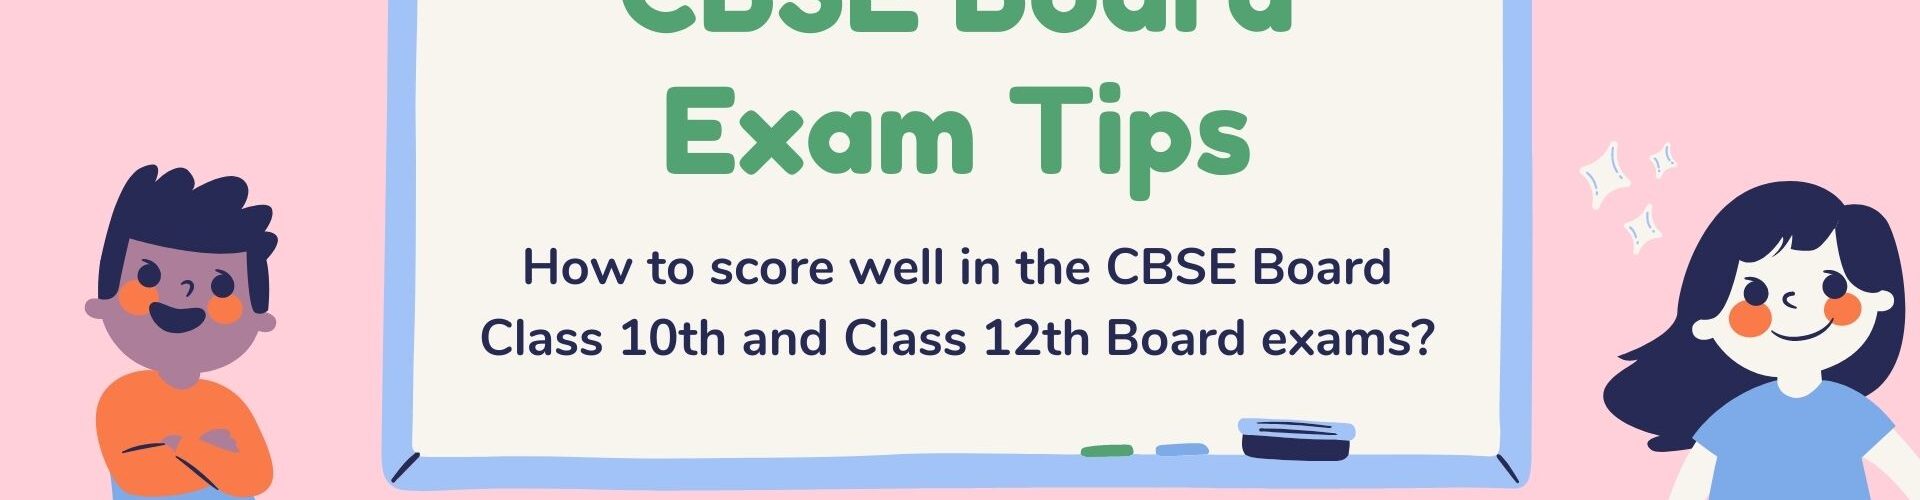 CBSE Board Exam Tips